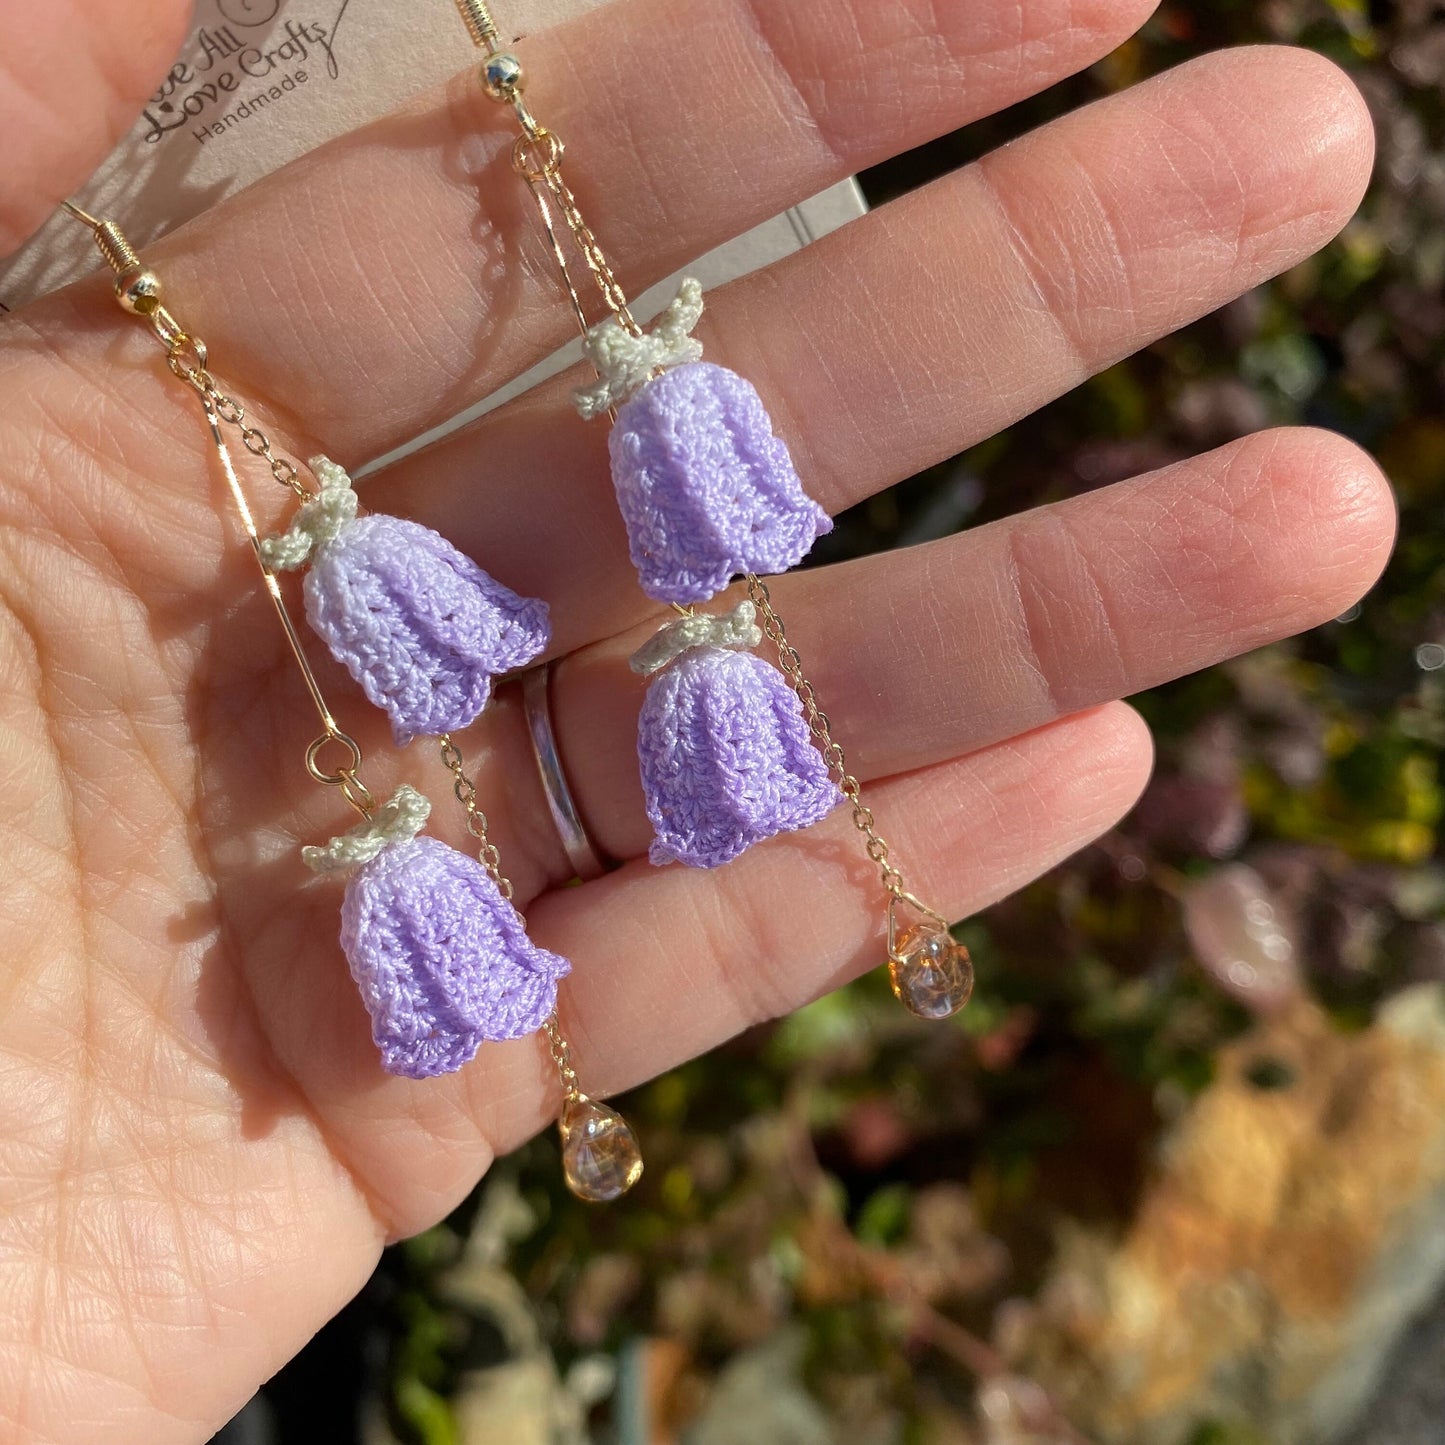 Purple bell shaped clematis flower ring crochet dangle earrings/Microcrochet/925 sterling silver/gift for her/Knitting handmade jewelry